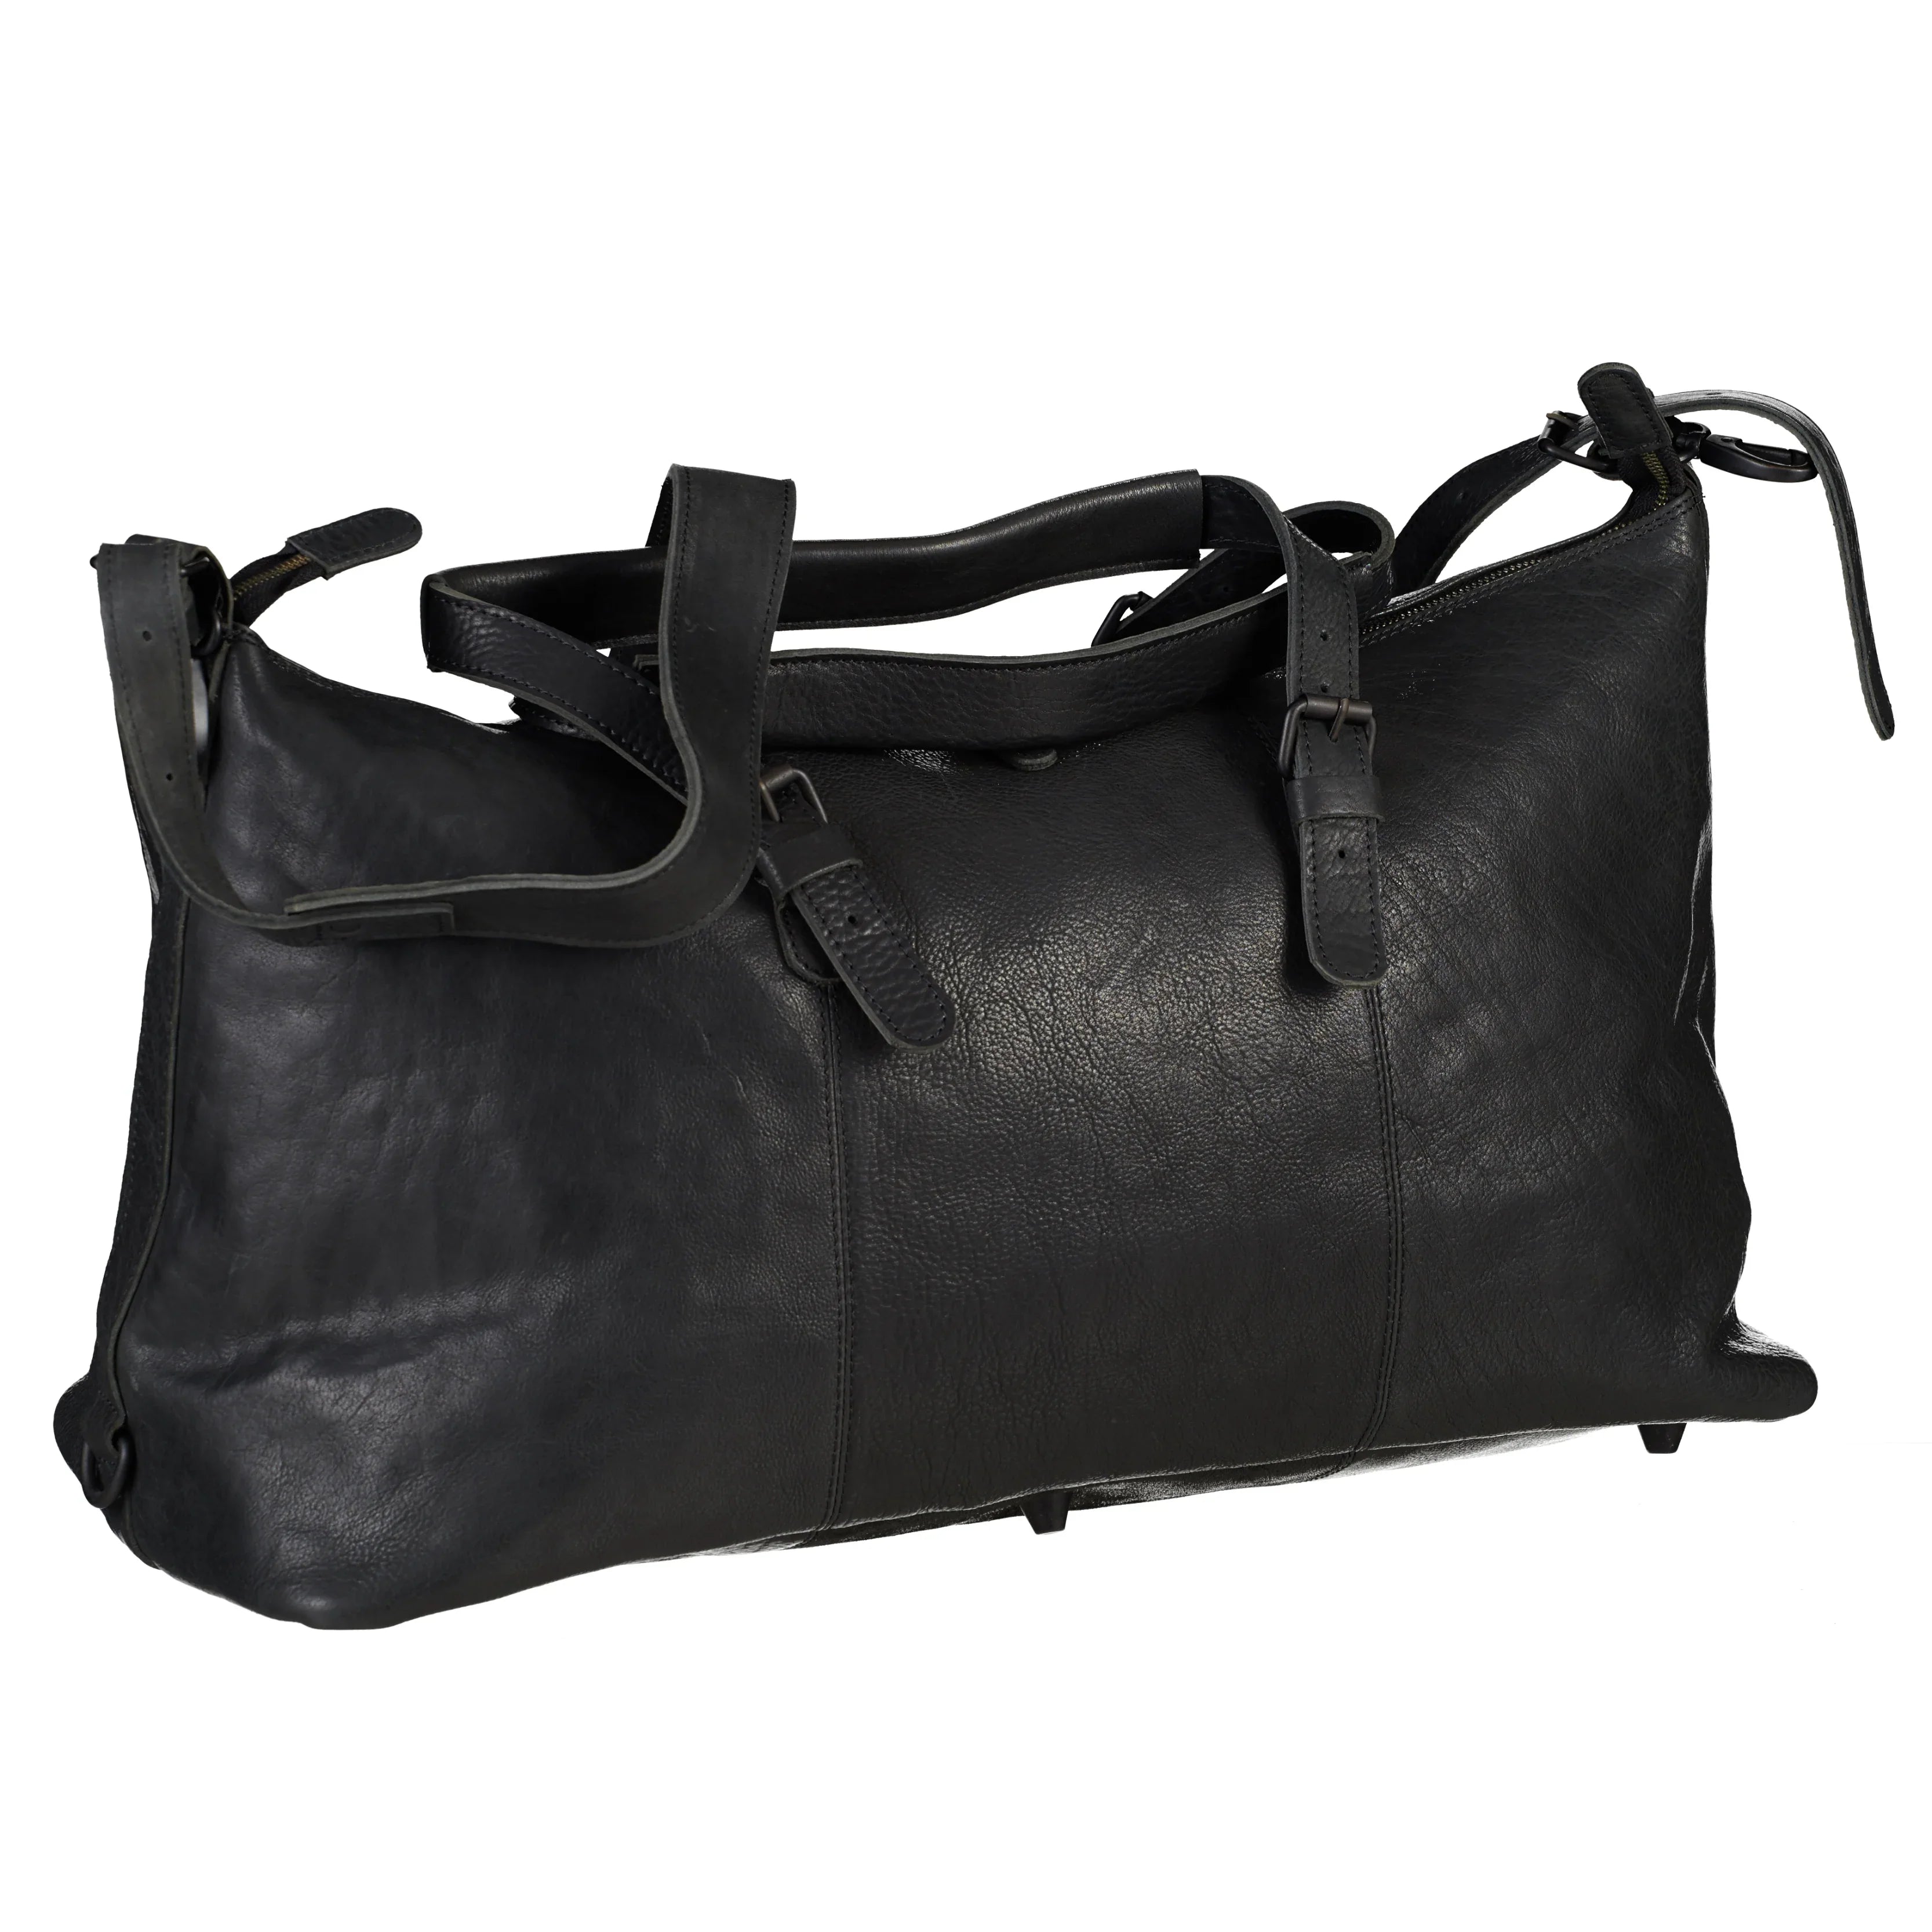 Harold's Johan P travel bag 55 cm - black